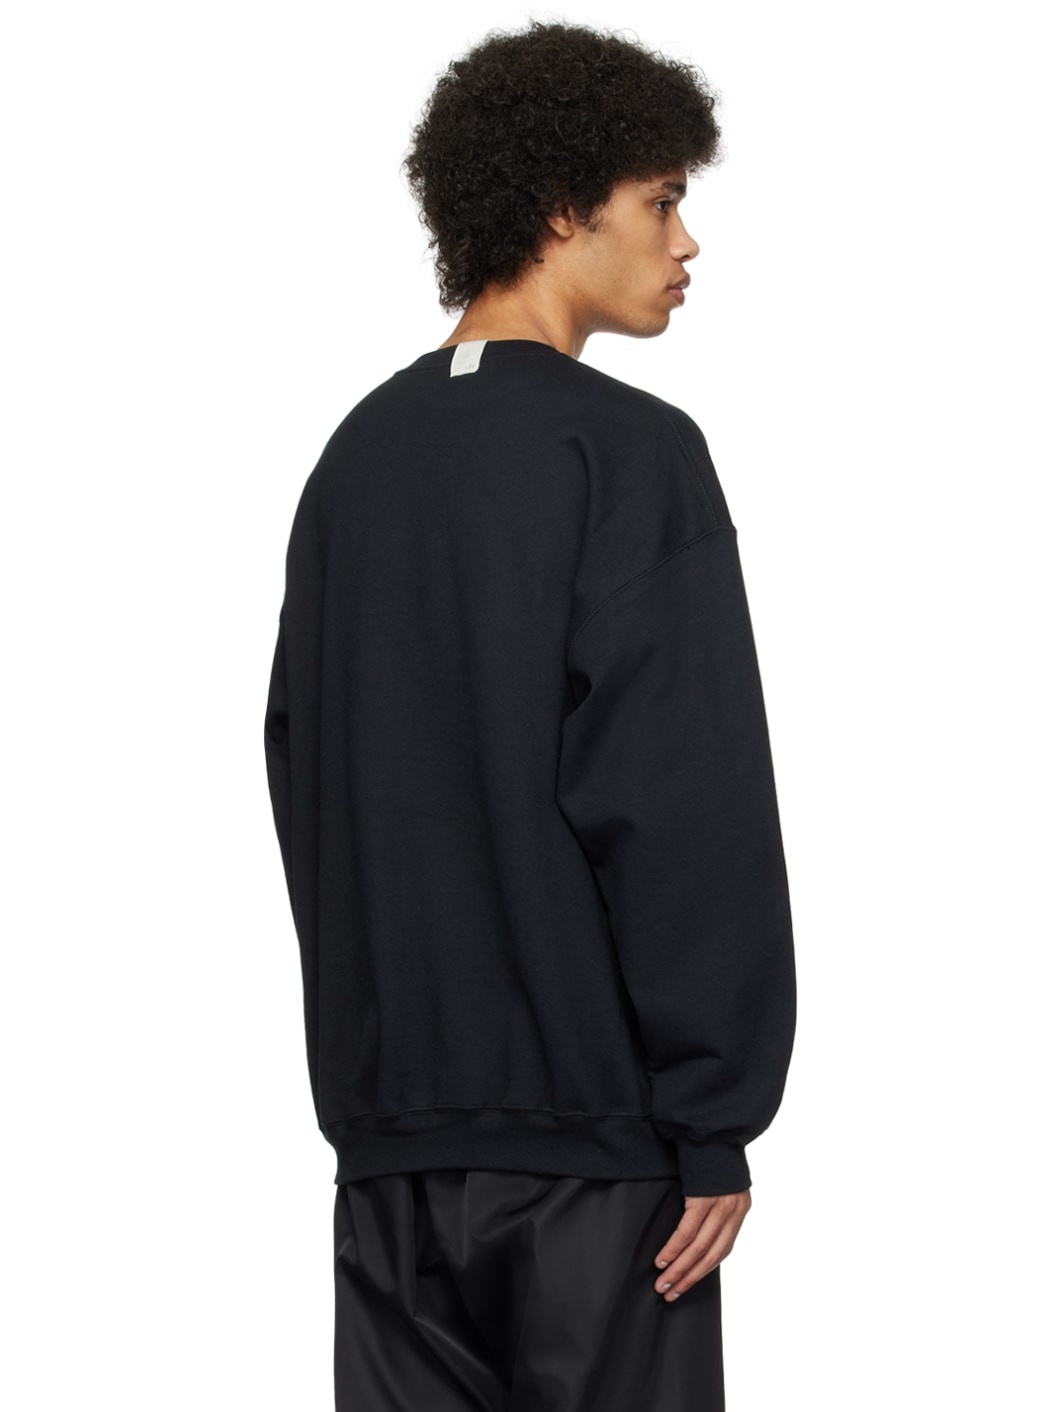 Black Patch Sweatshirt - 3